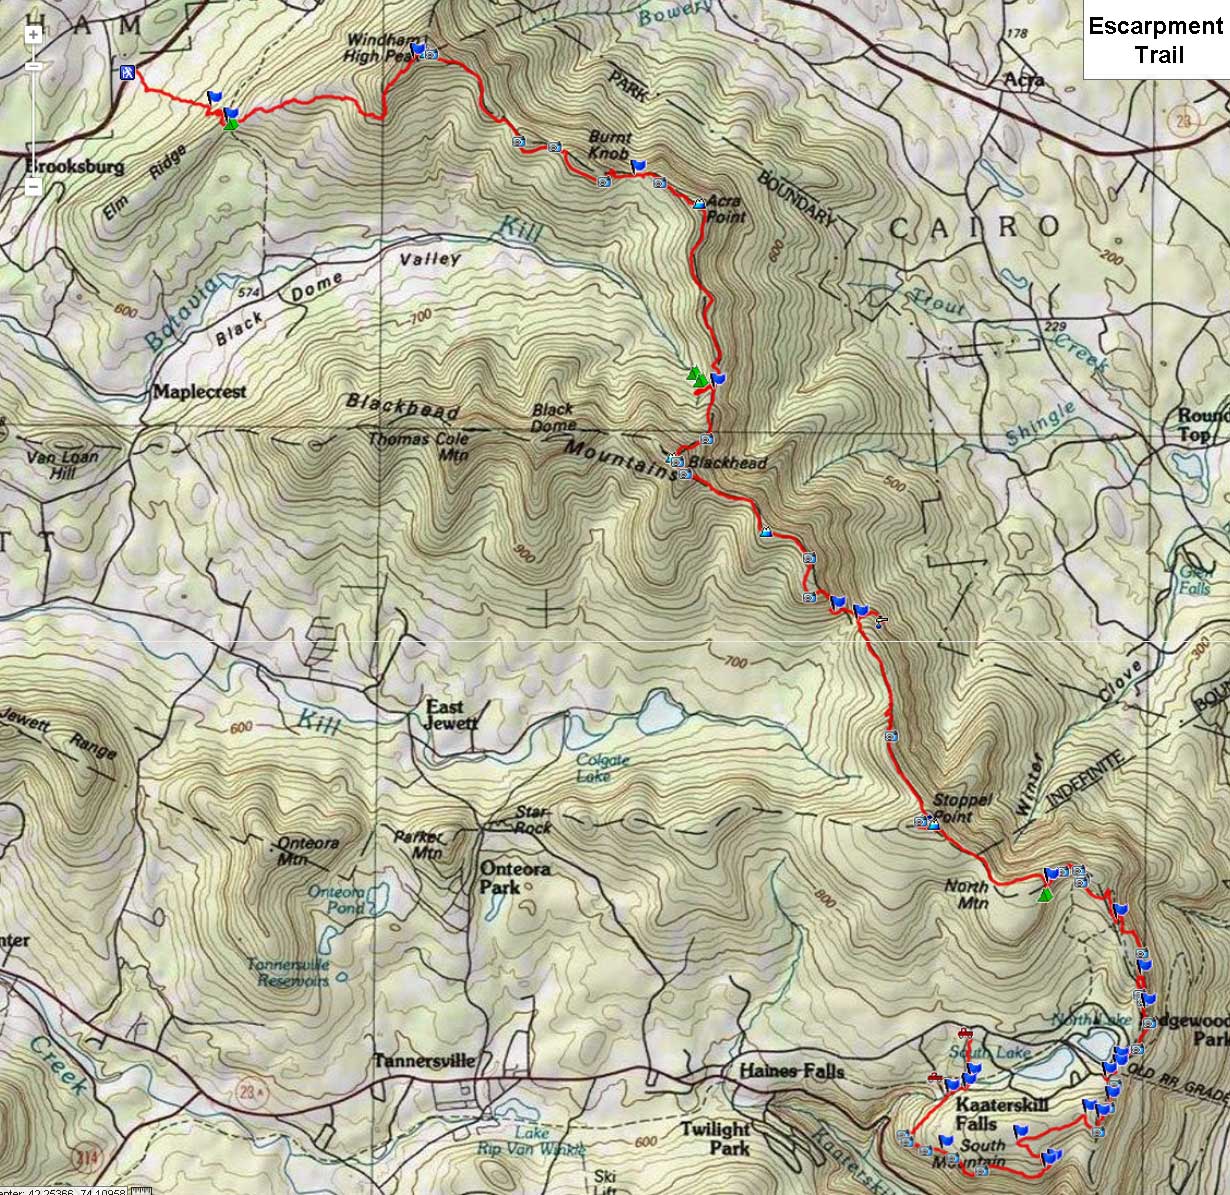 gps map of entire Escarpment Trail in the Catskill Mountains